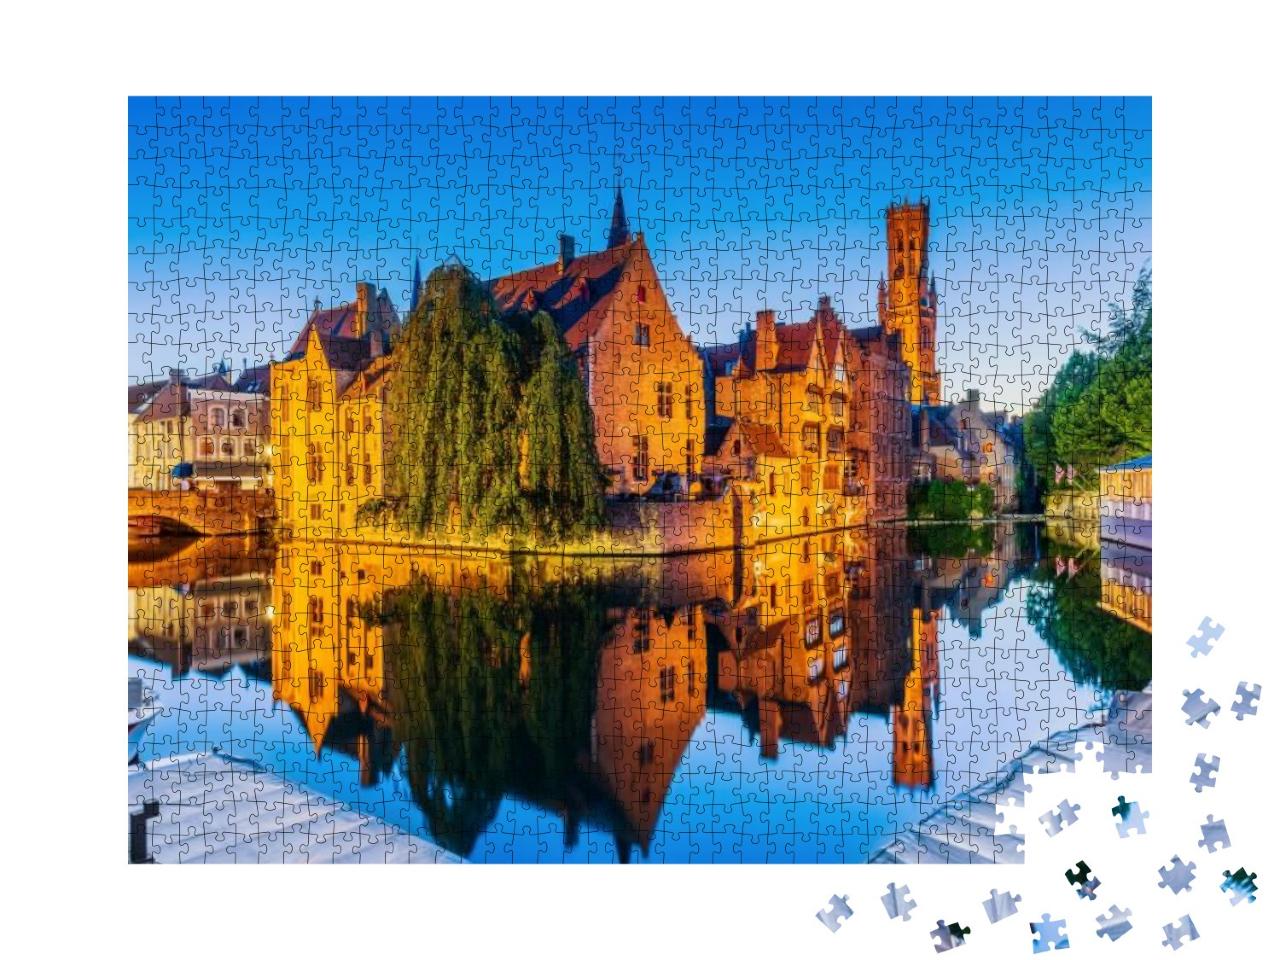 Puzzle 1000 Teile „Der wunderschöne Rozenhoedkaai-Kanal in Brügge, Belgien“